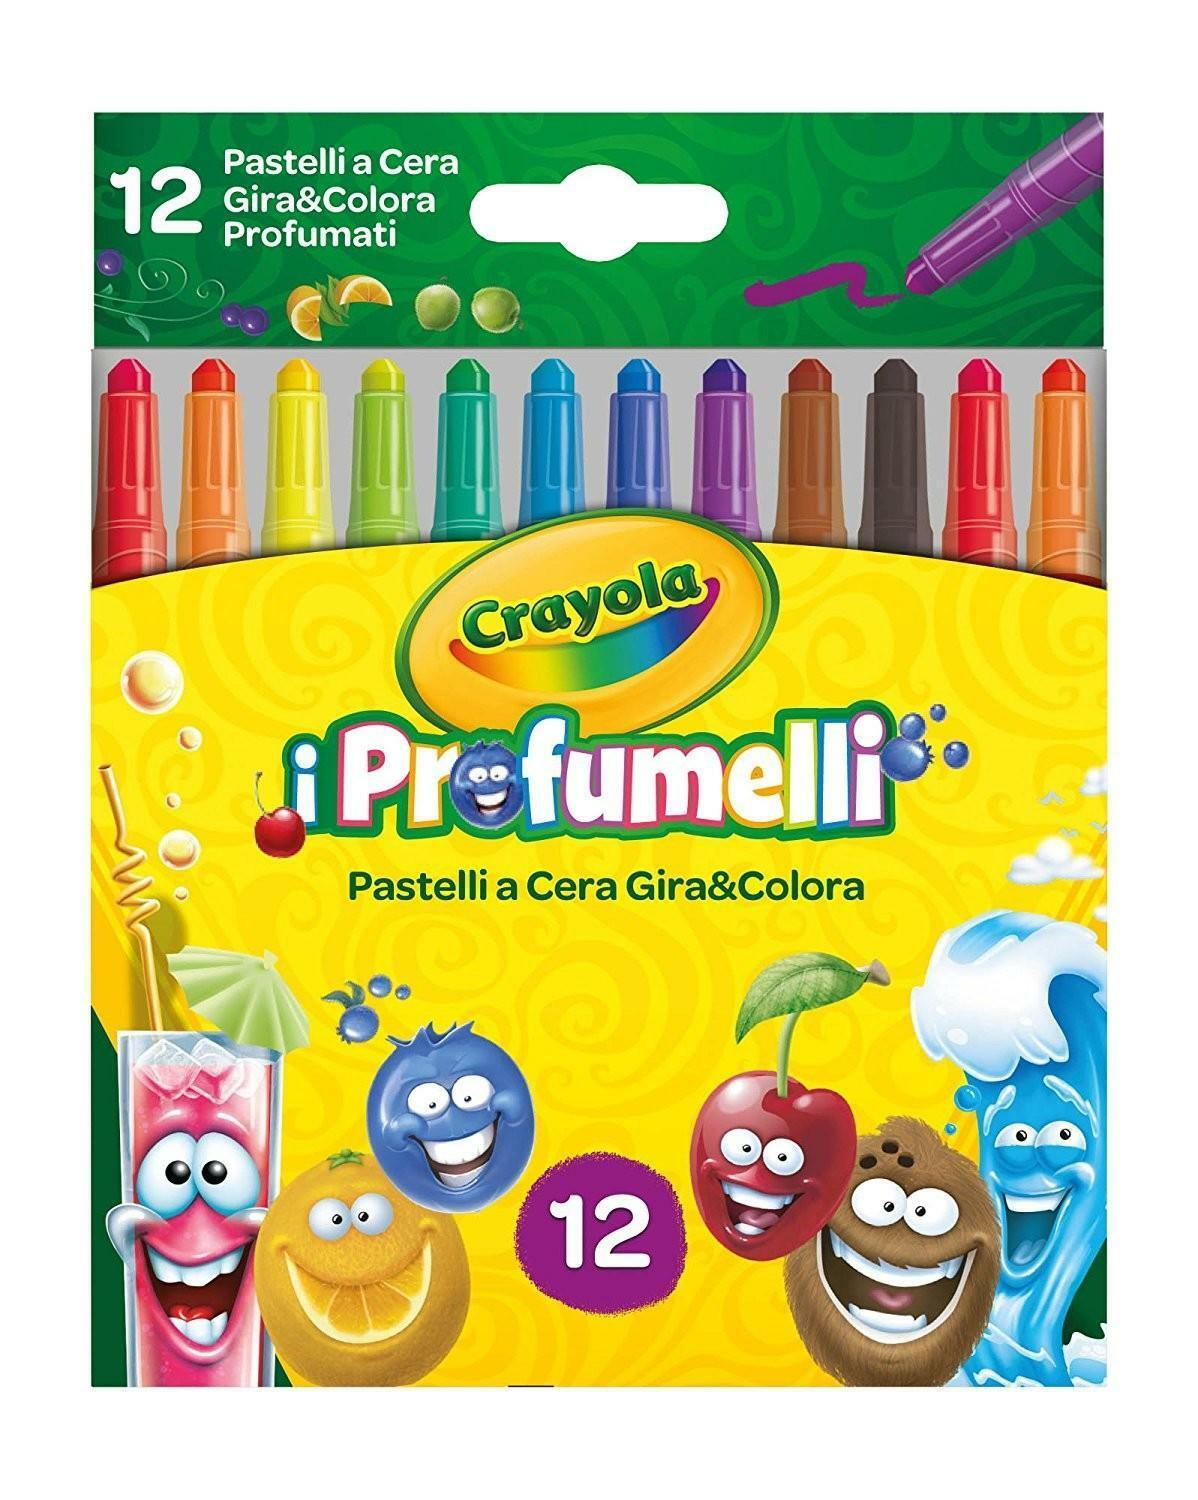 crayola 12 pastelli a cera gira & colora i profumelli